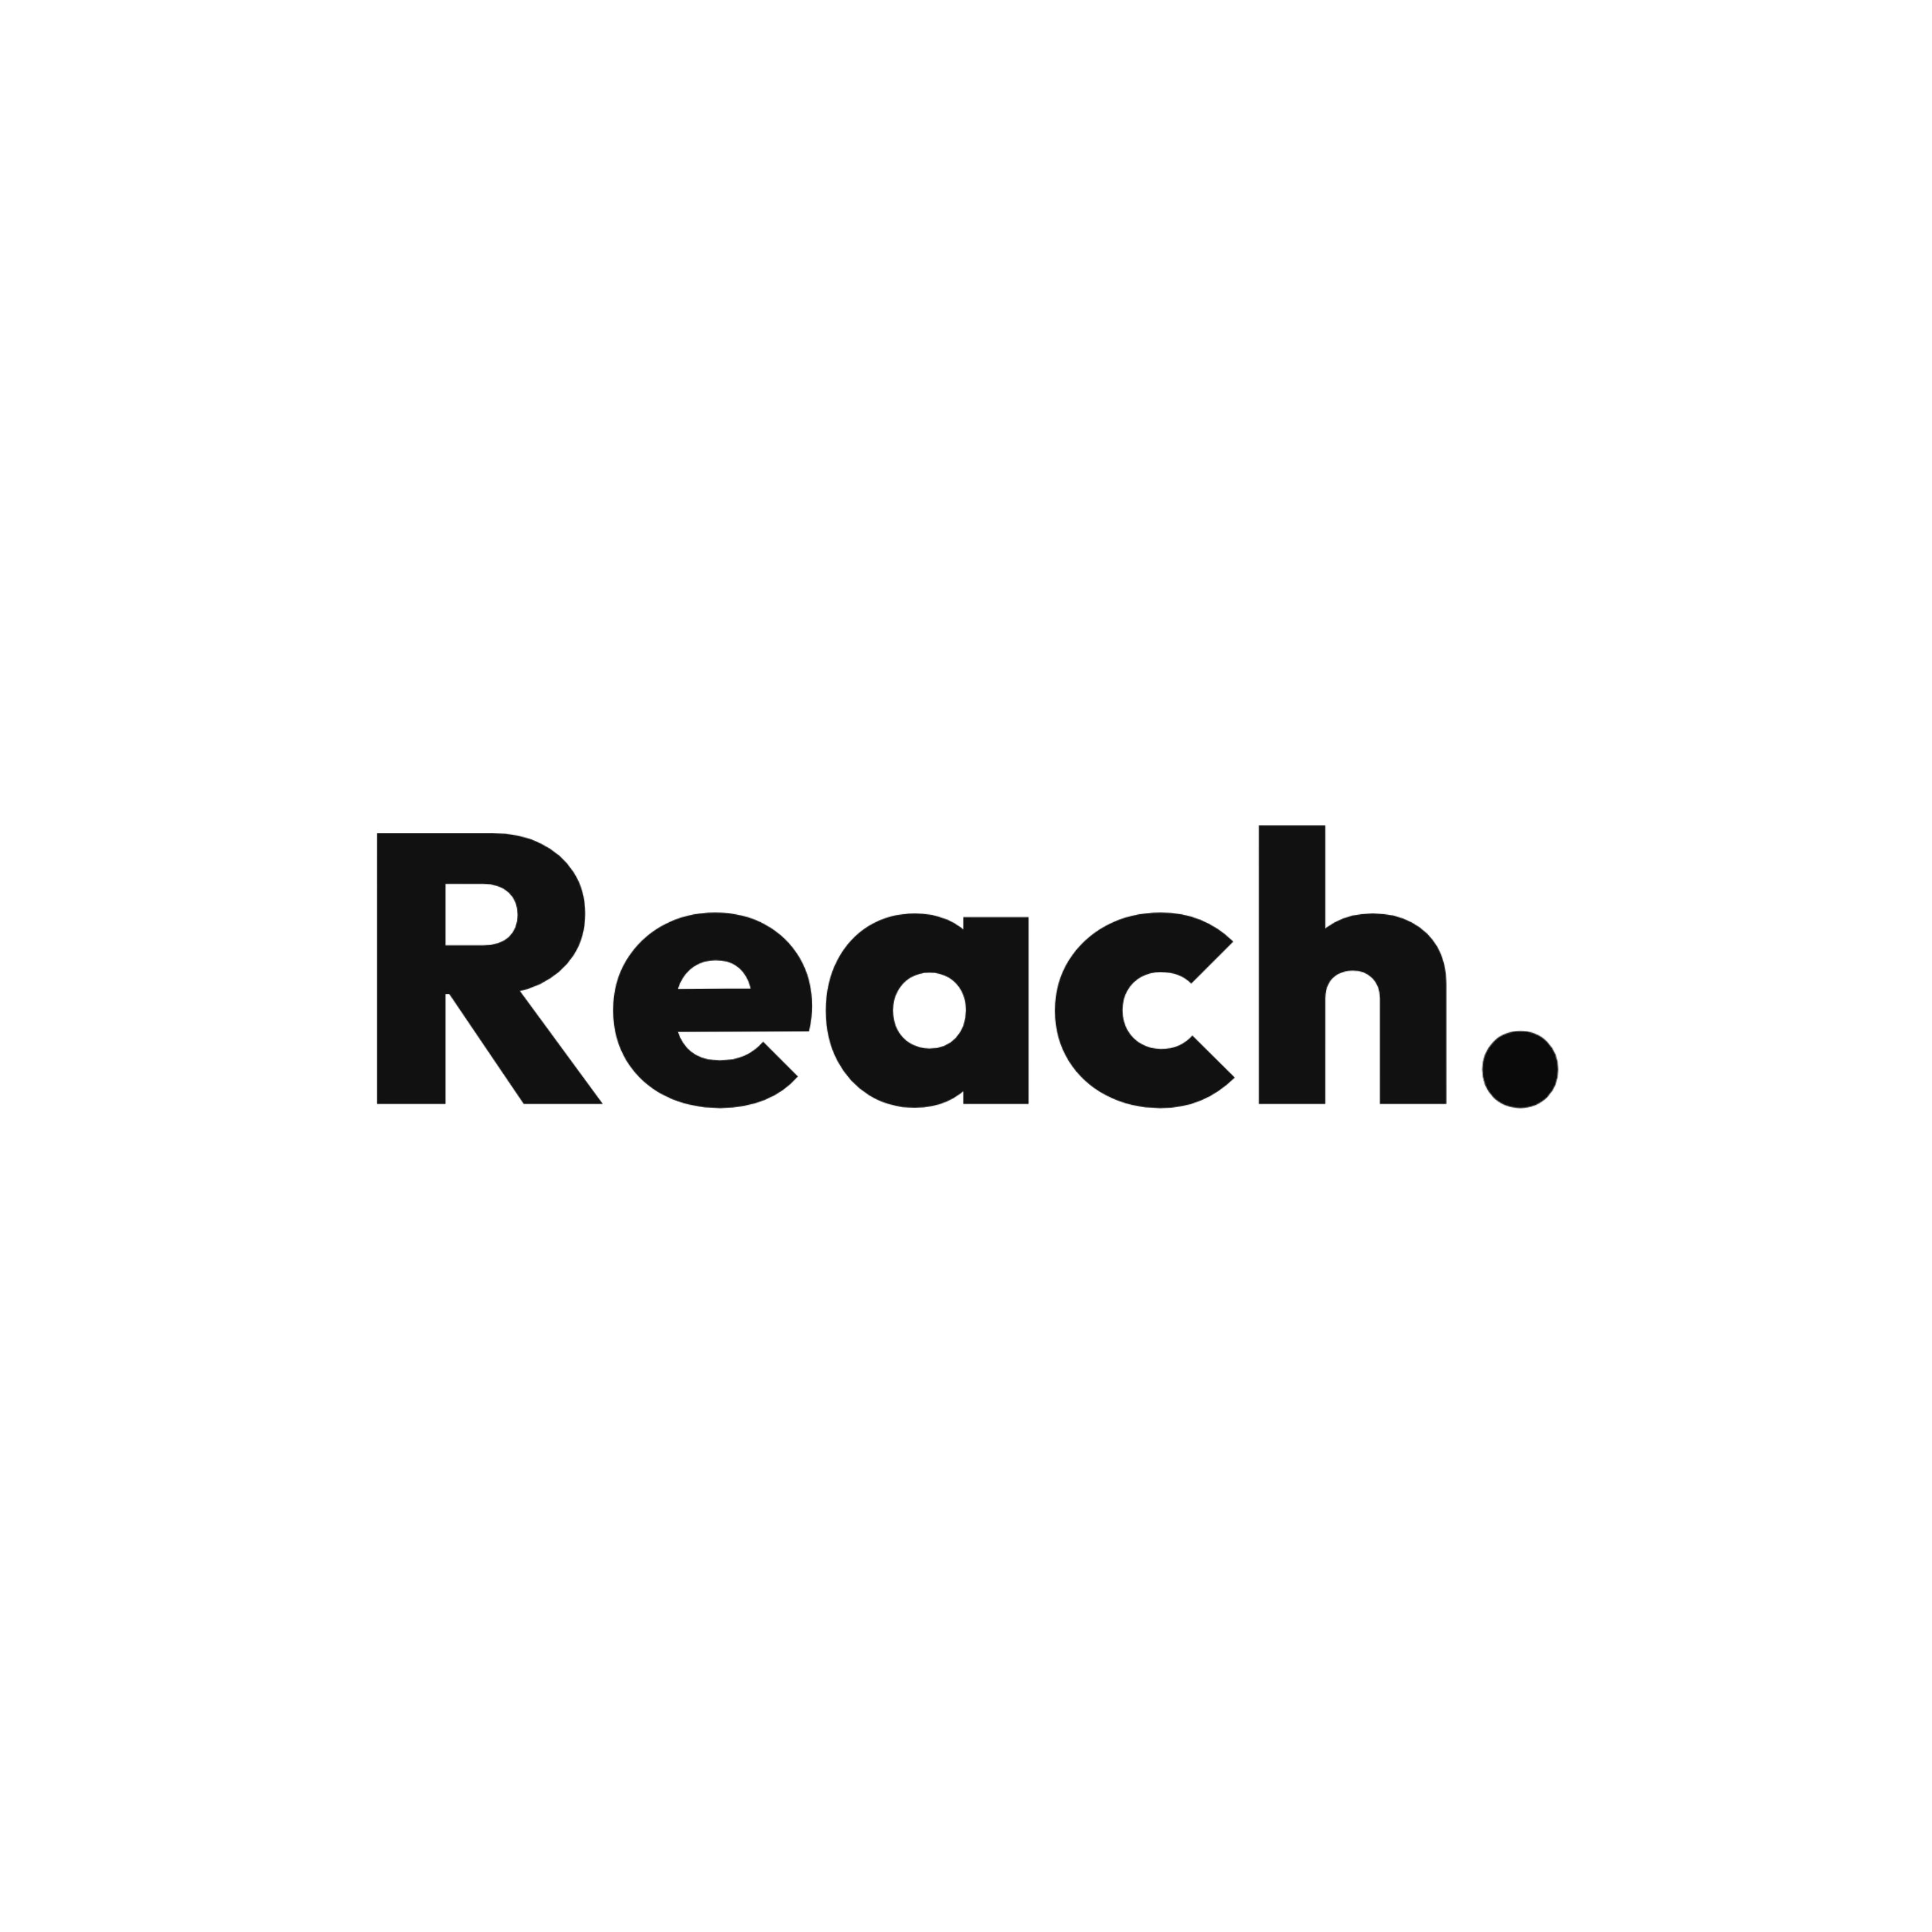 Reach Marketing Agency